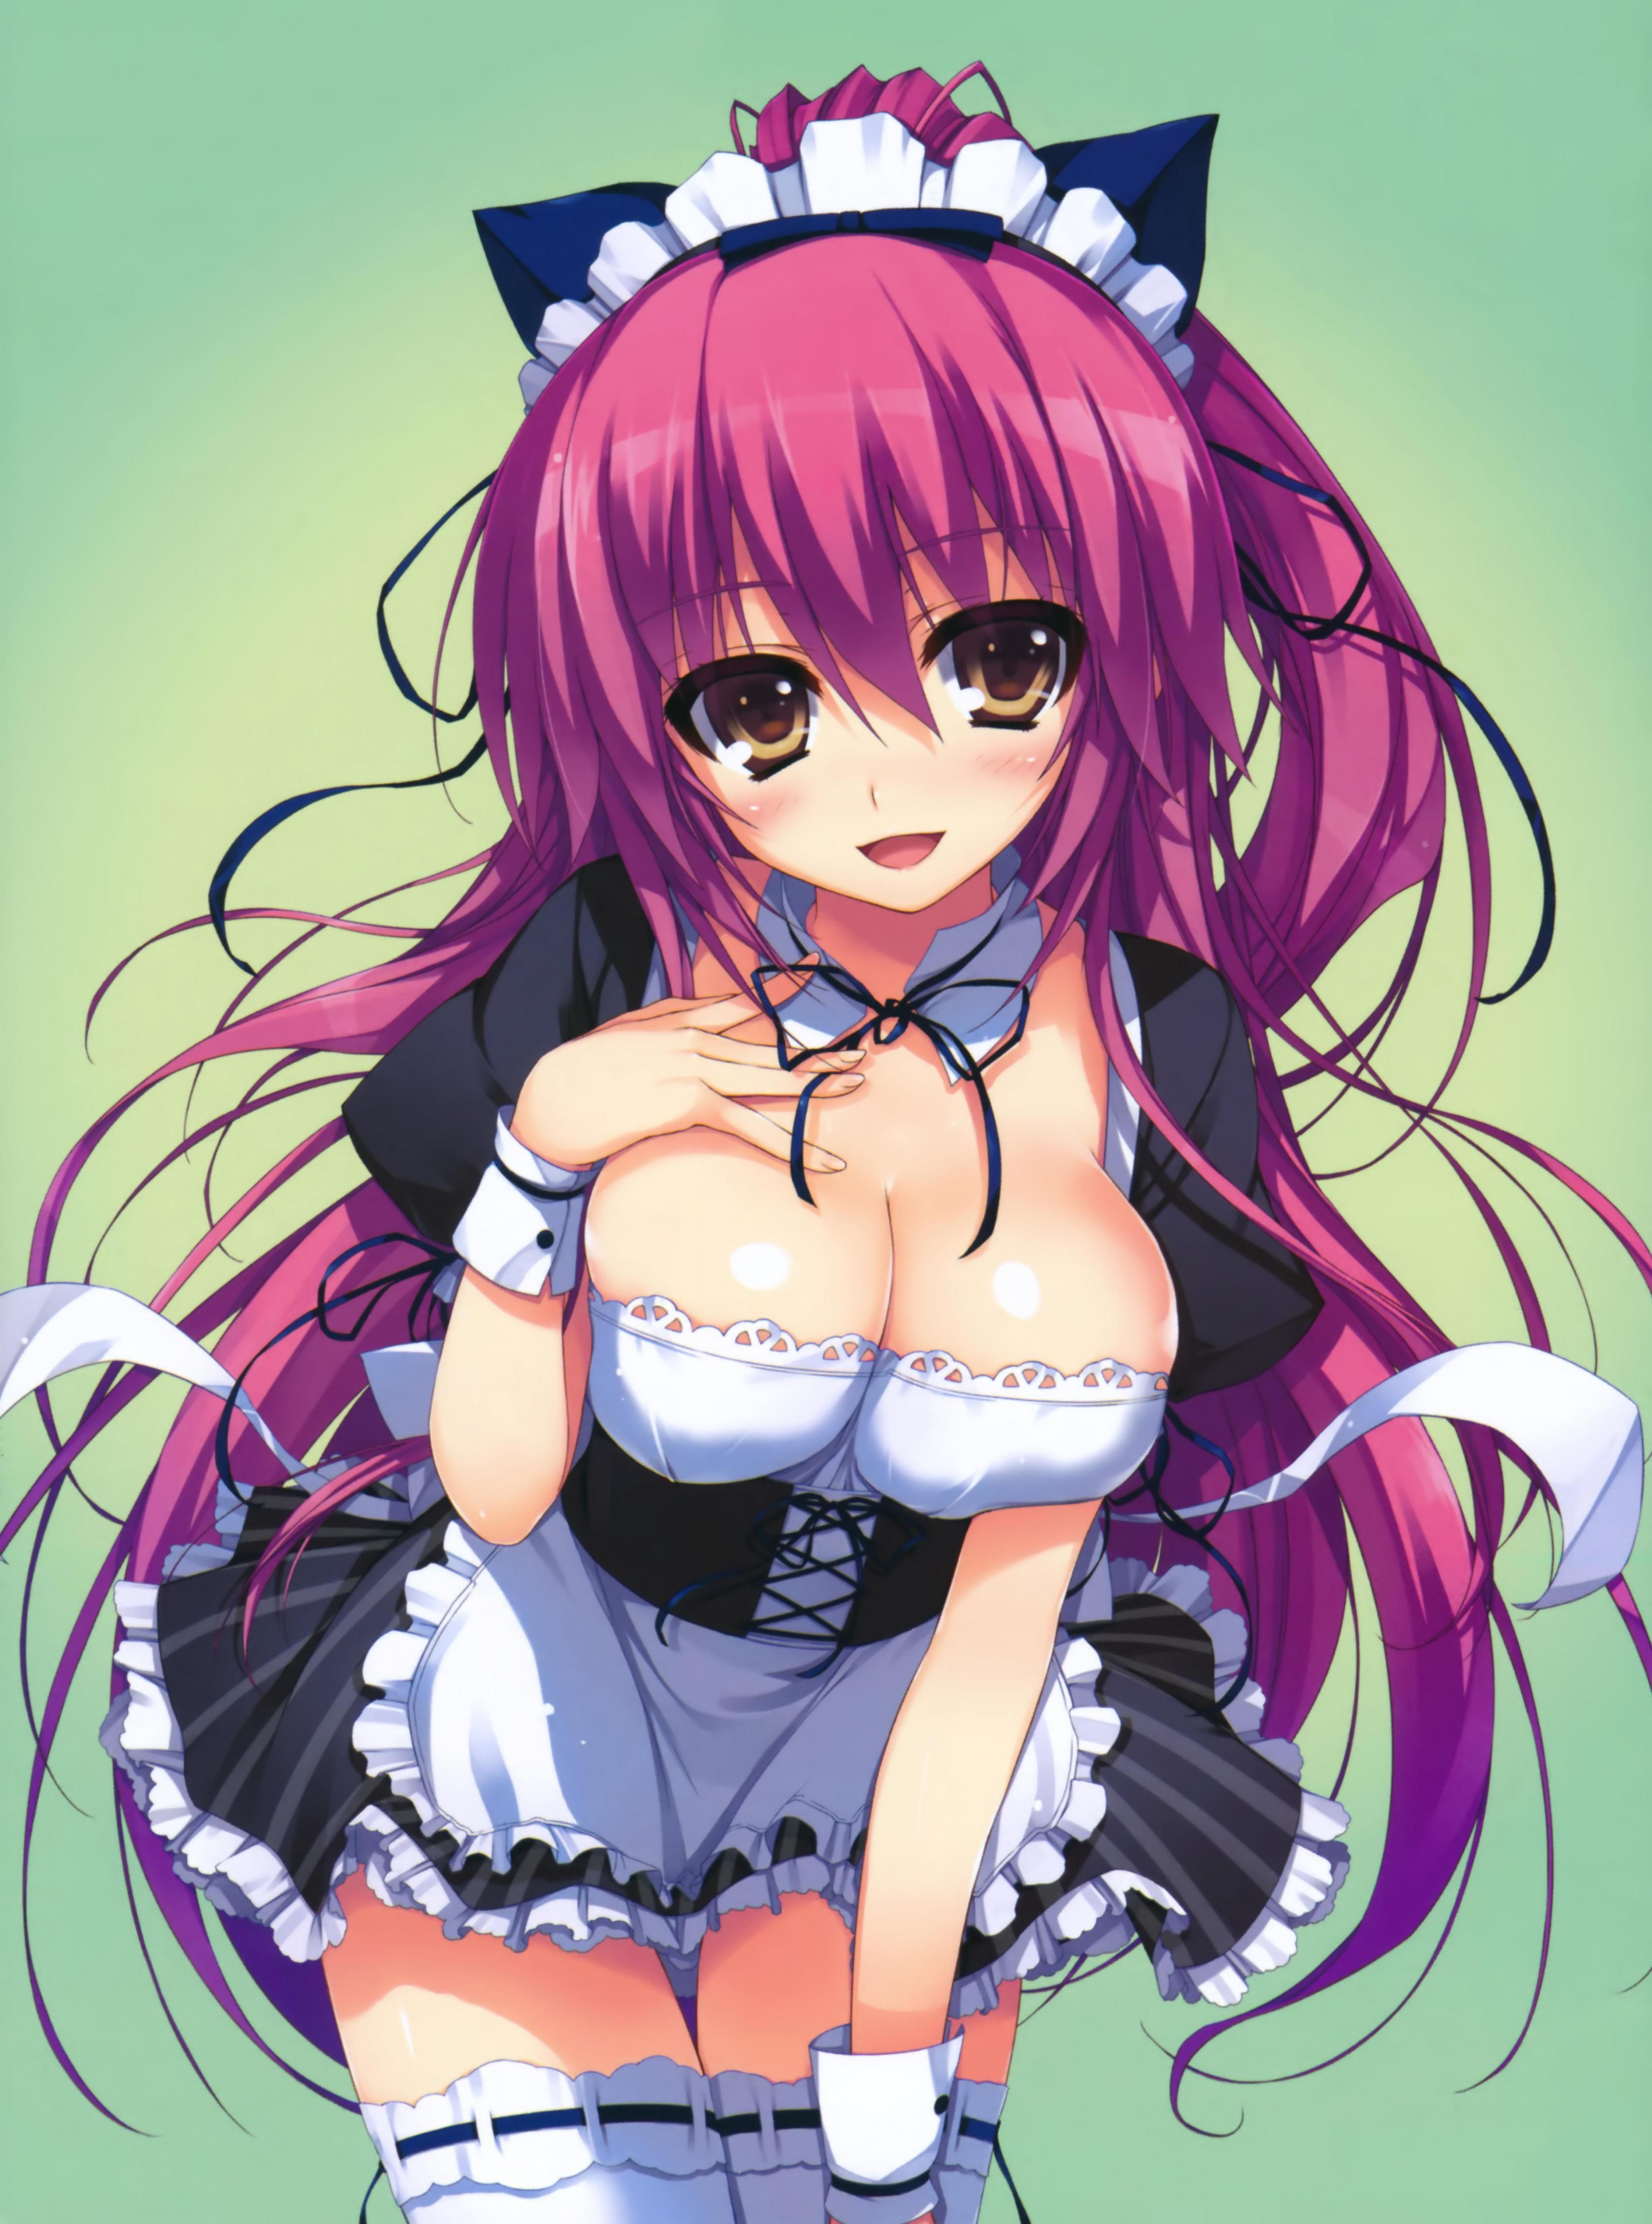 Second erotic image of maid 28